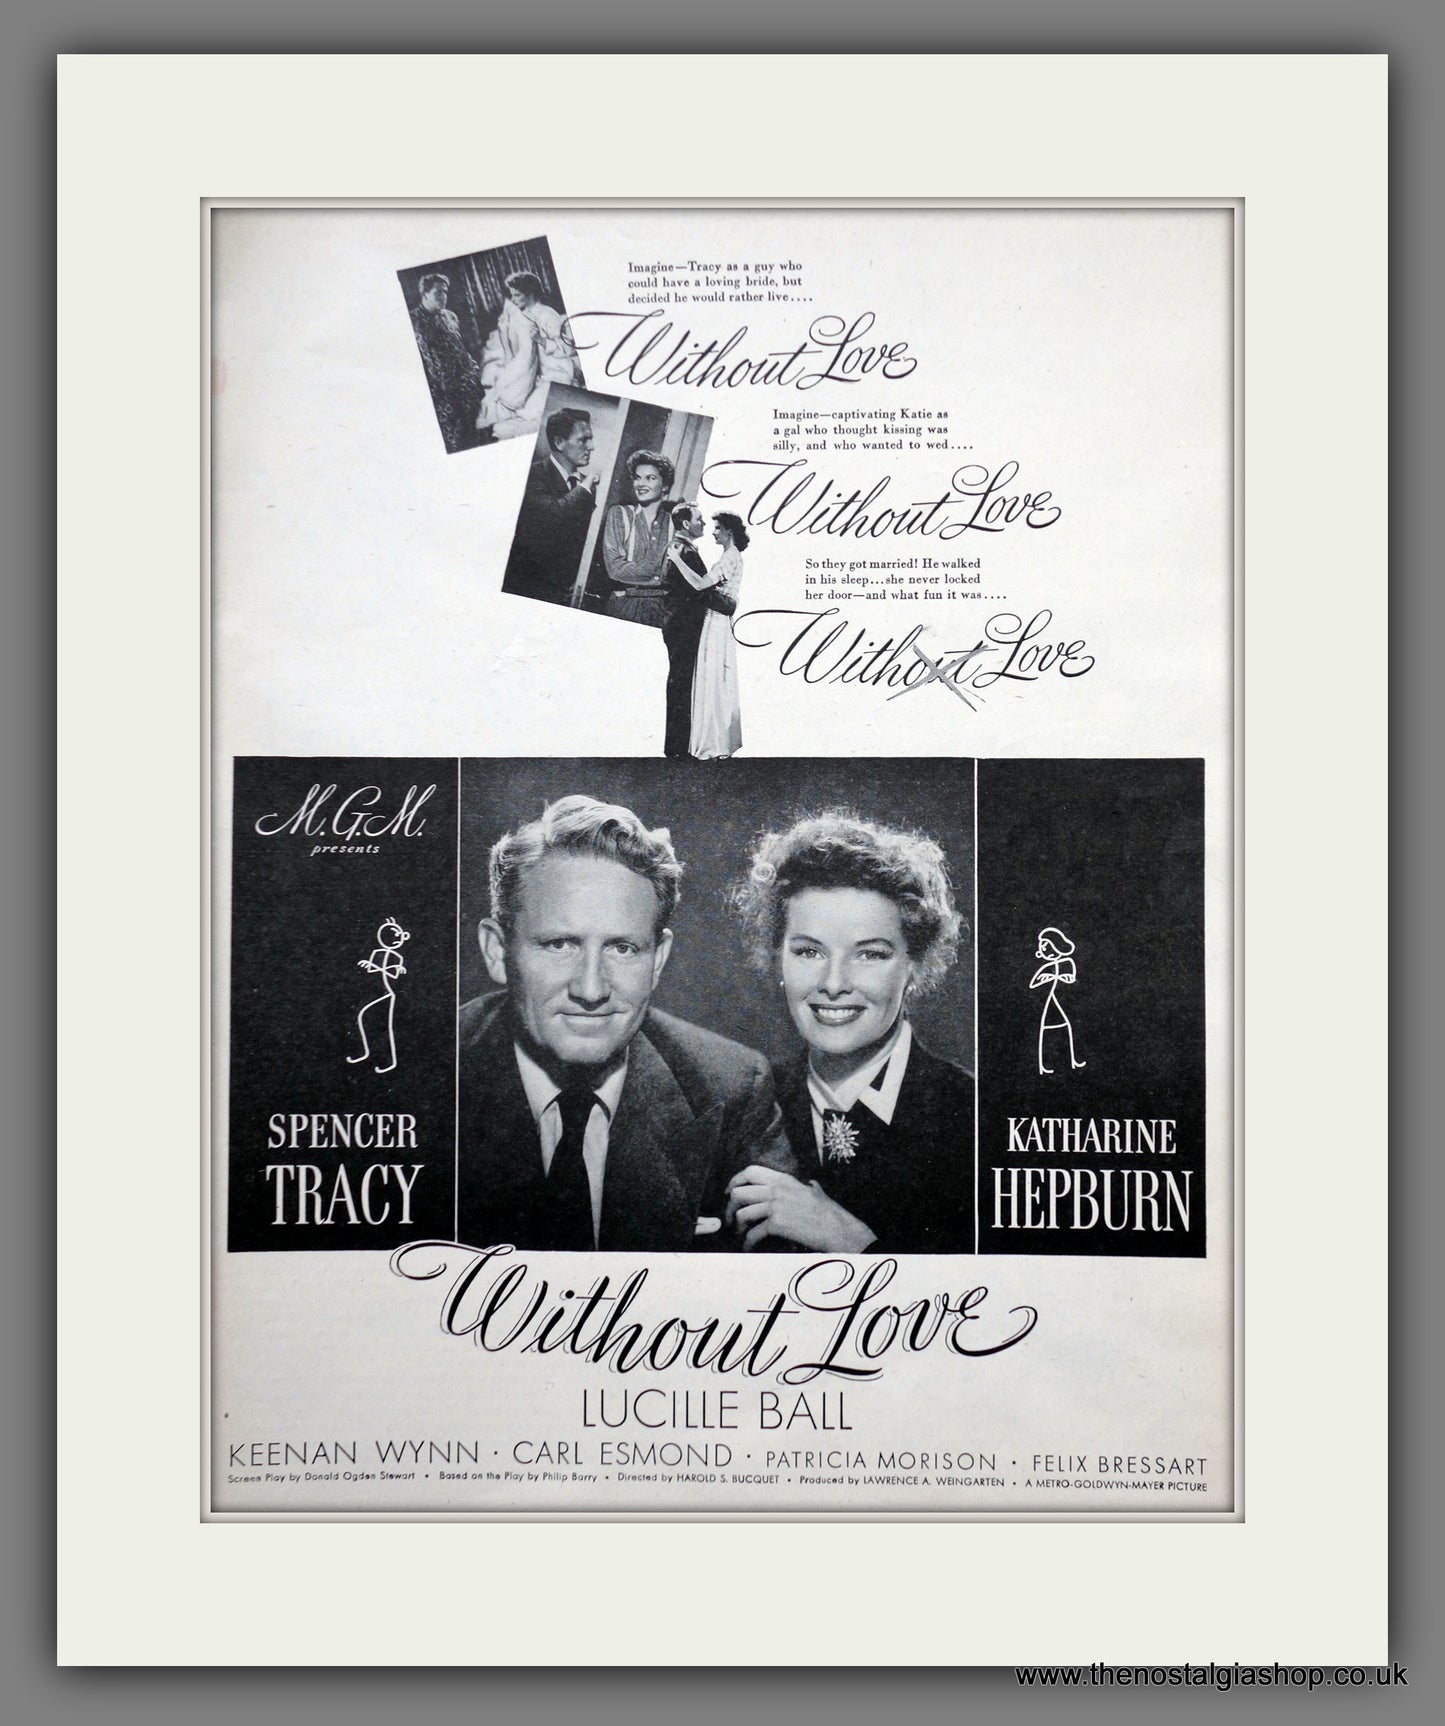 Without Love. Katharine Hepburn. Original Advert 1945 (ref AD301205)